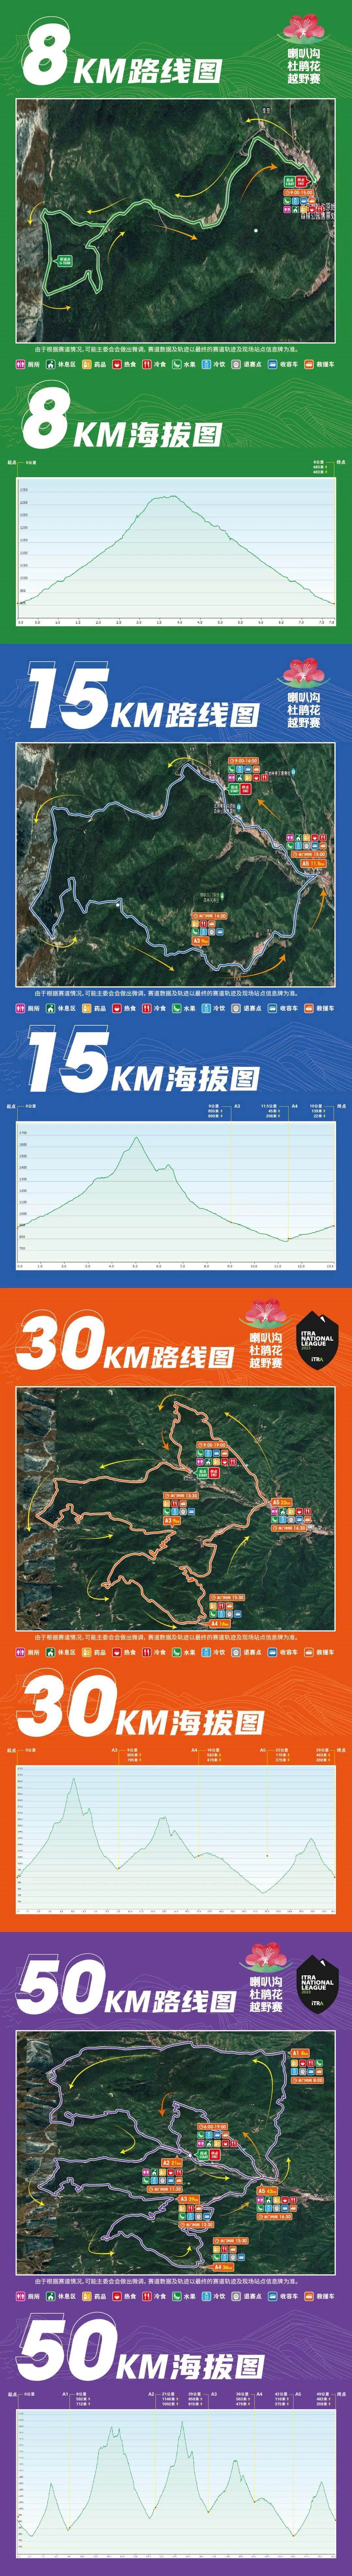 Ultra Race Beijing Labagou Azalea Route Map